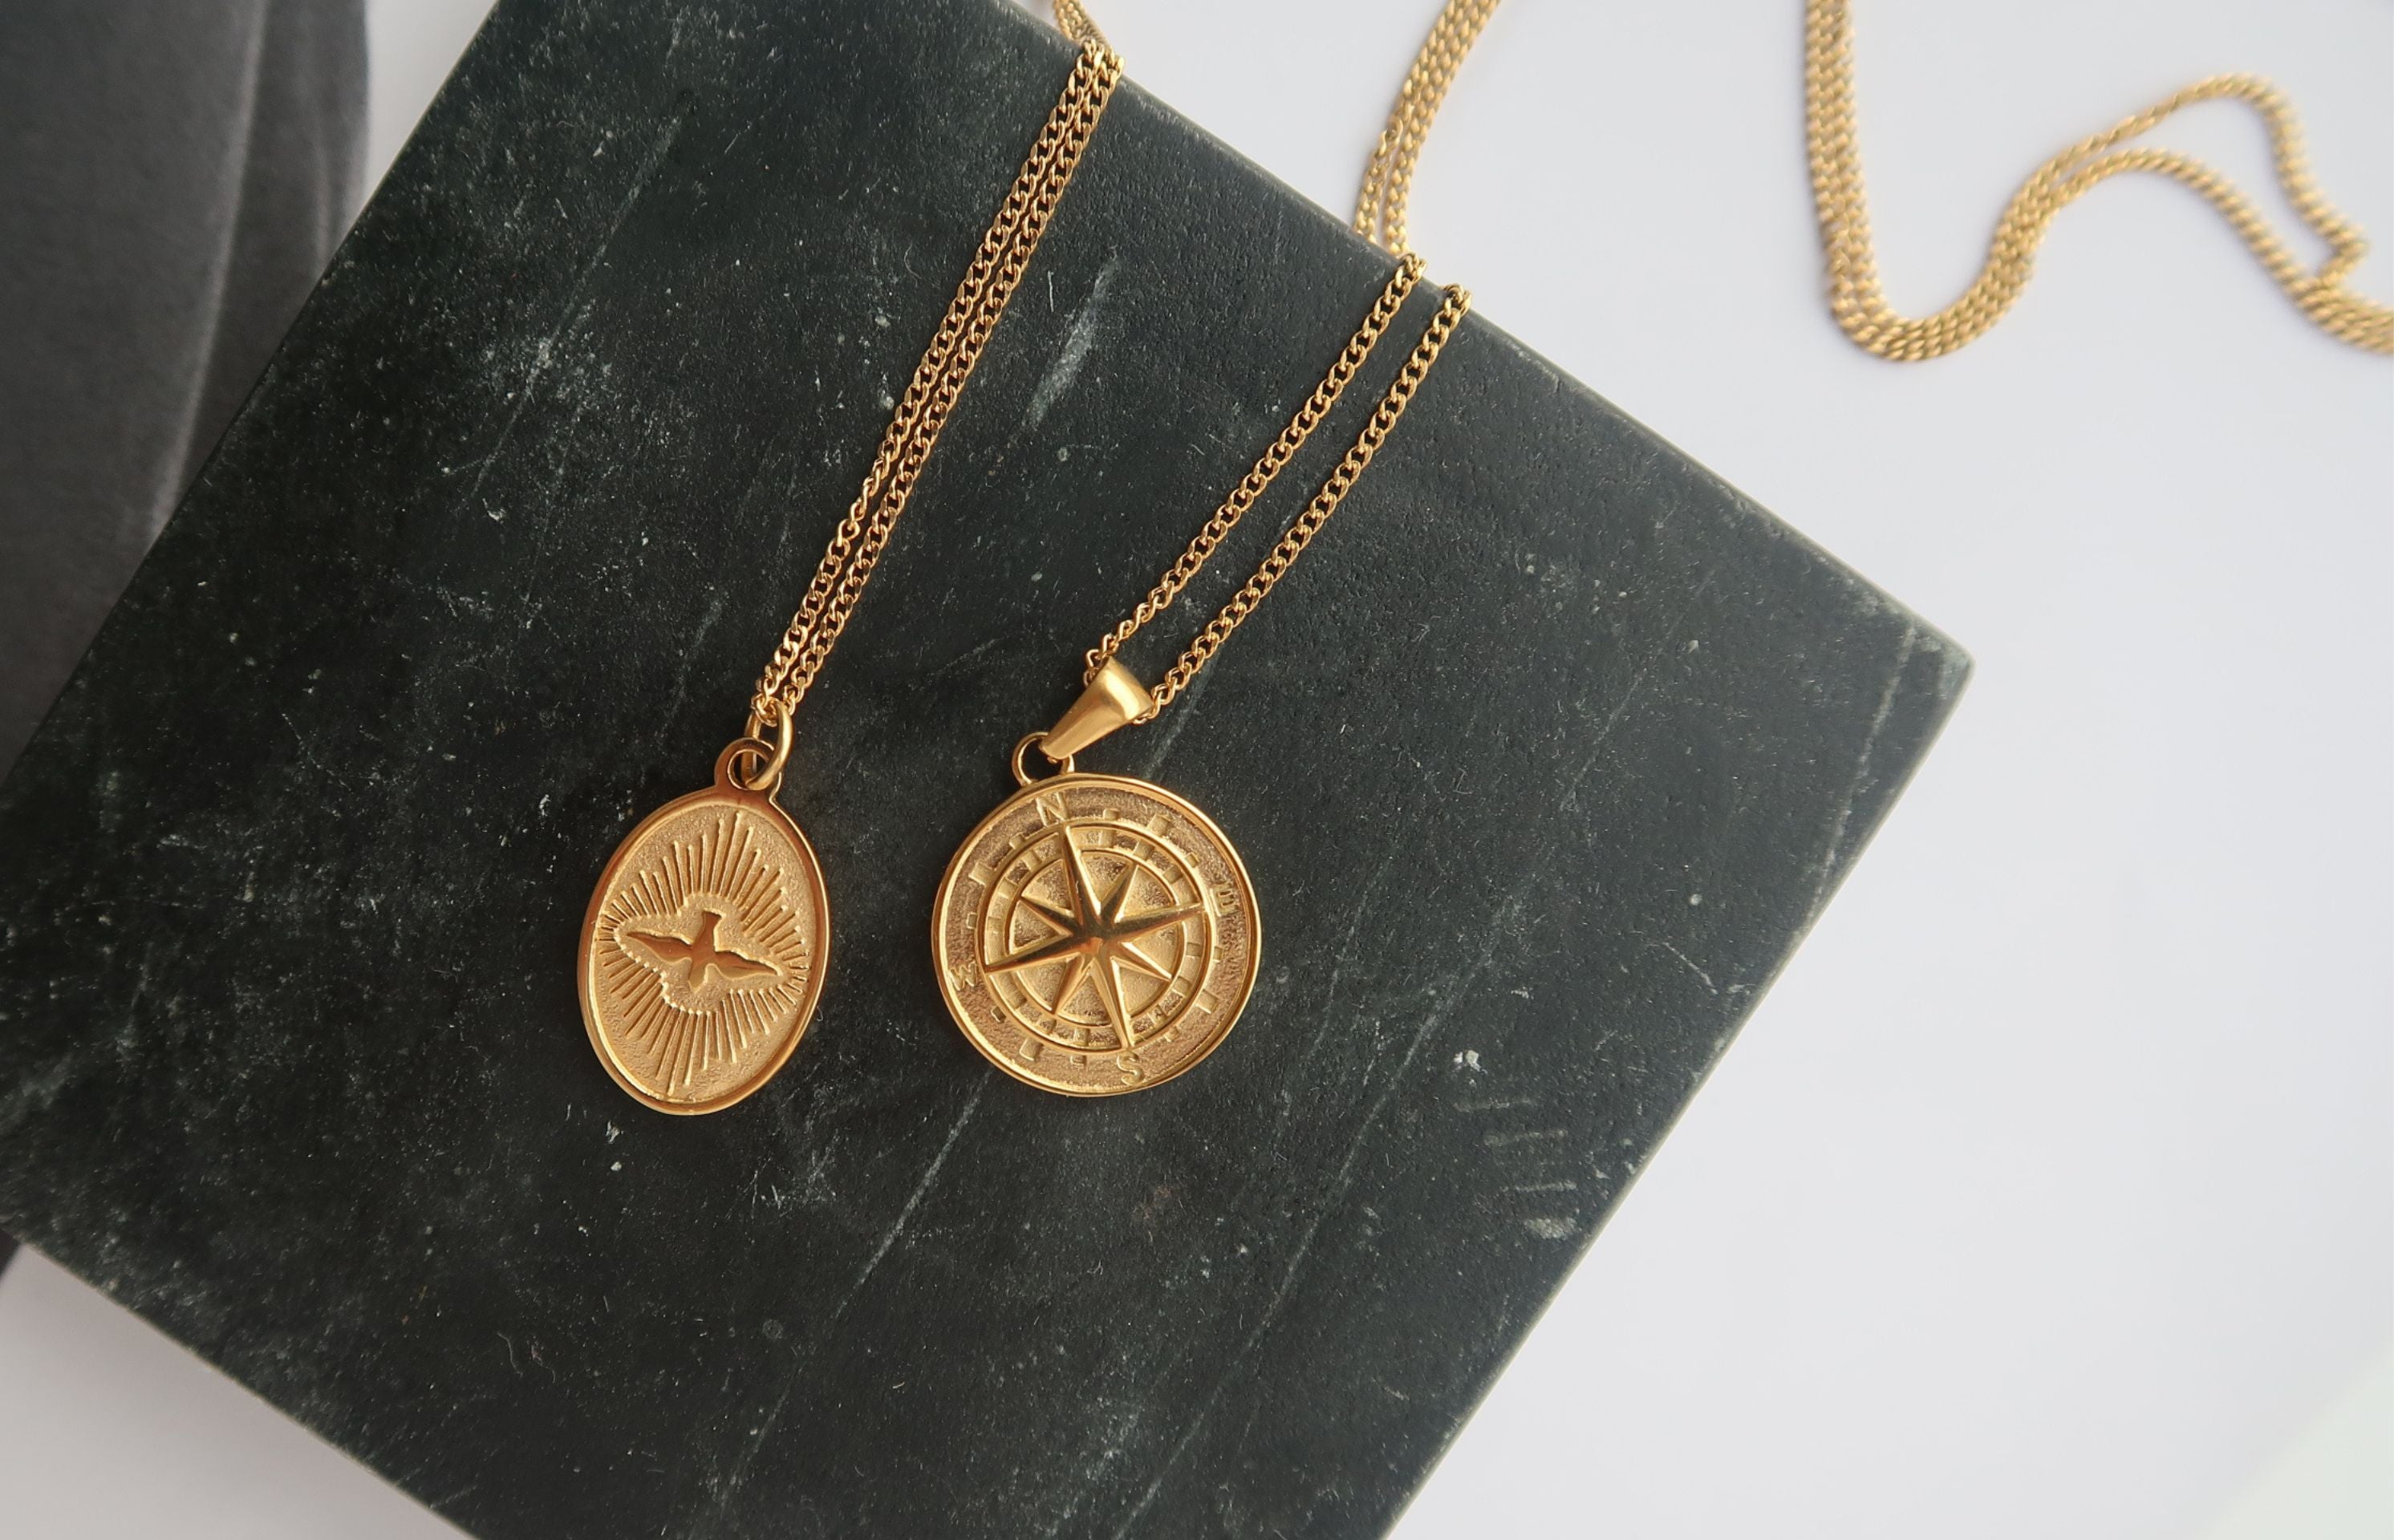 The Gold Gods Men's Micro Compass Pendant Necklace